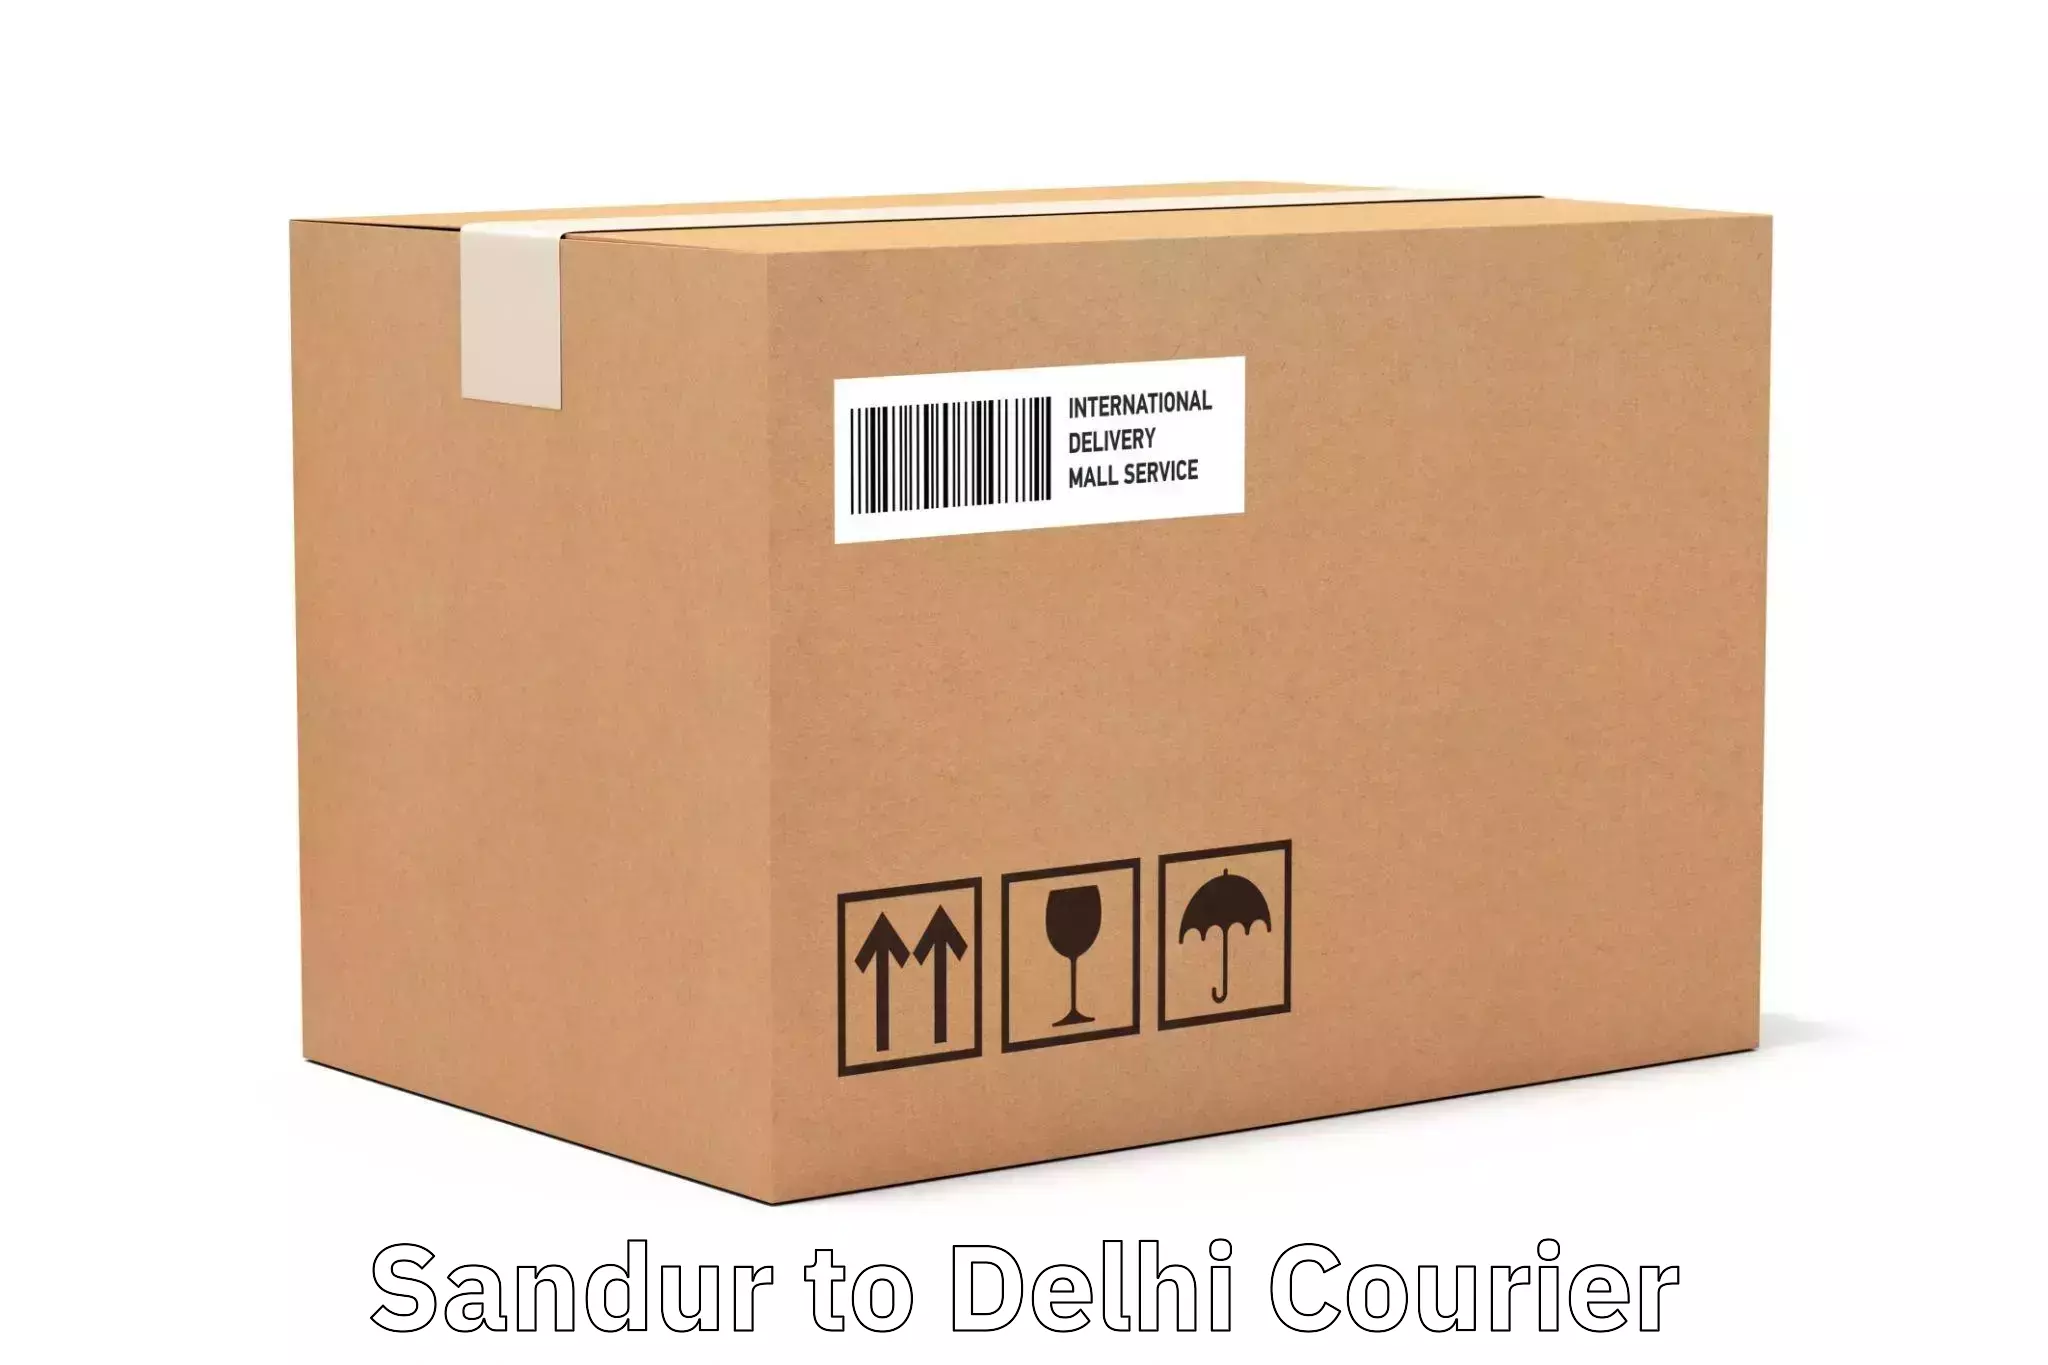 Express mail service Sandur to Delhi